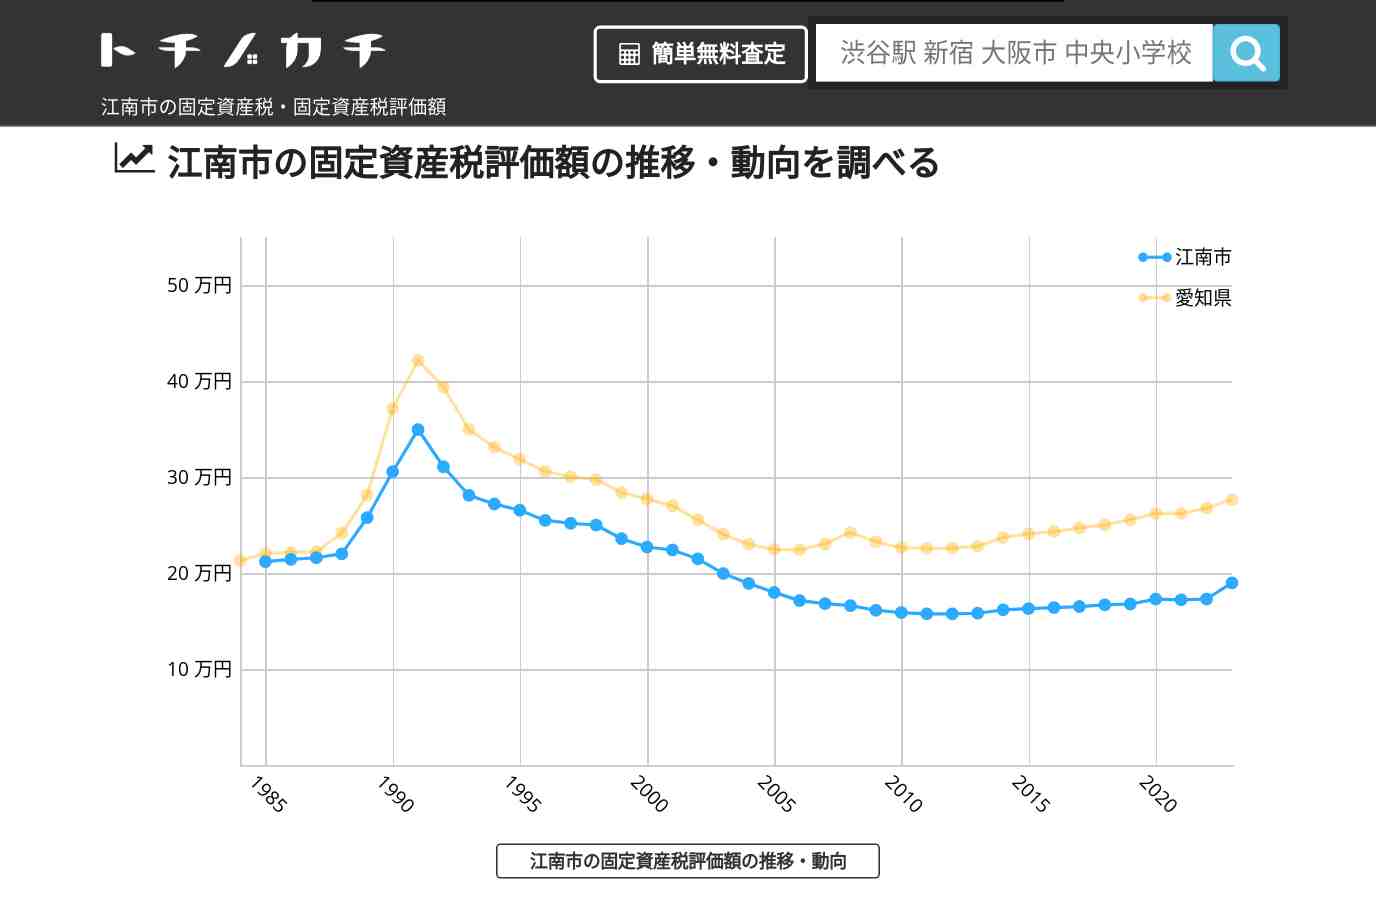 滝中学校(愛知県 江南市)周辺の固定資産税・固定資産税評価額 | トチノカチ